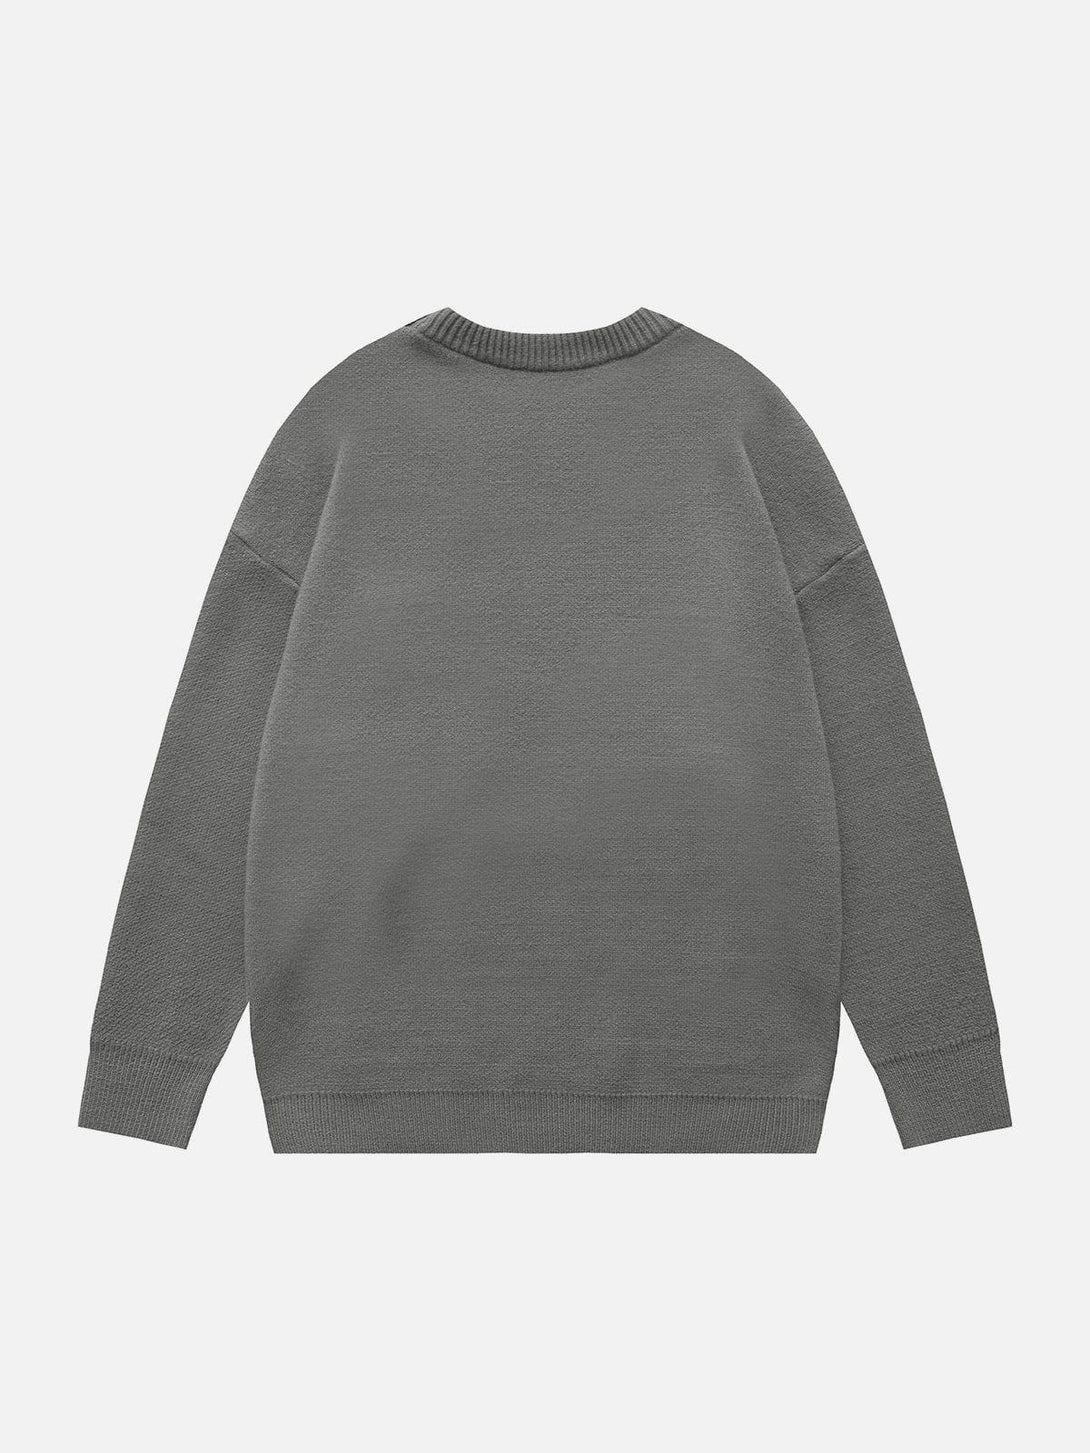 Majesda® - Pixelated Duck Print Sweater outfit ideas streetwear fashion